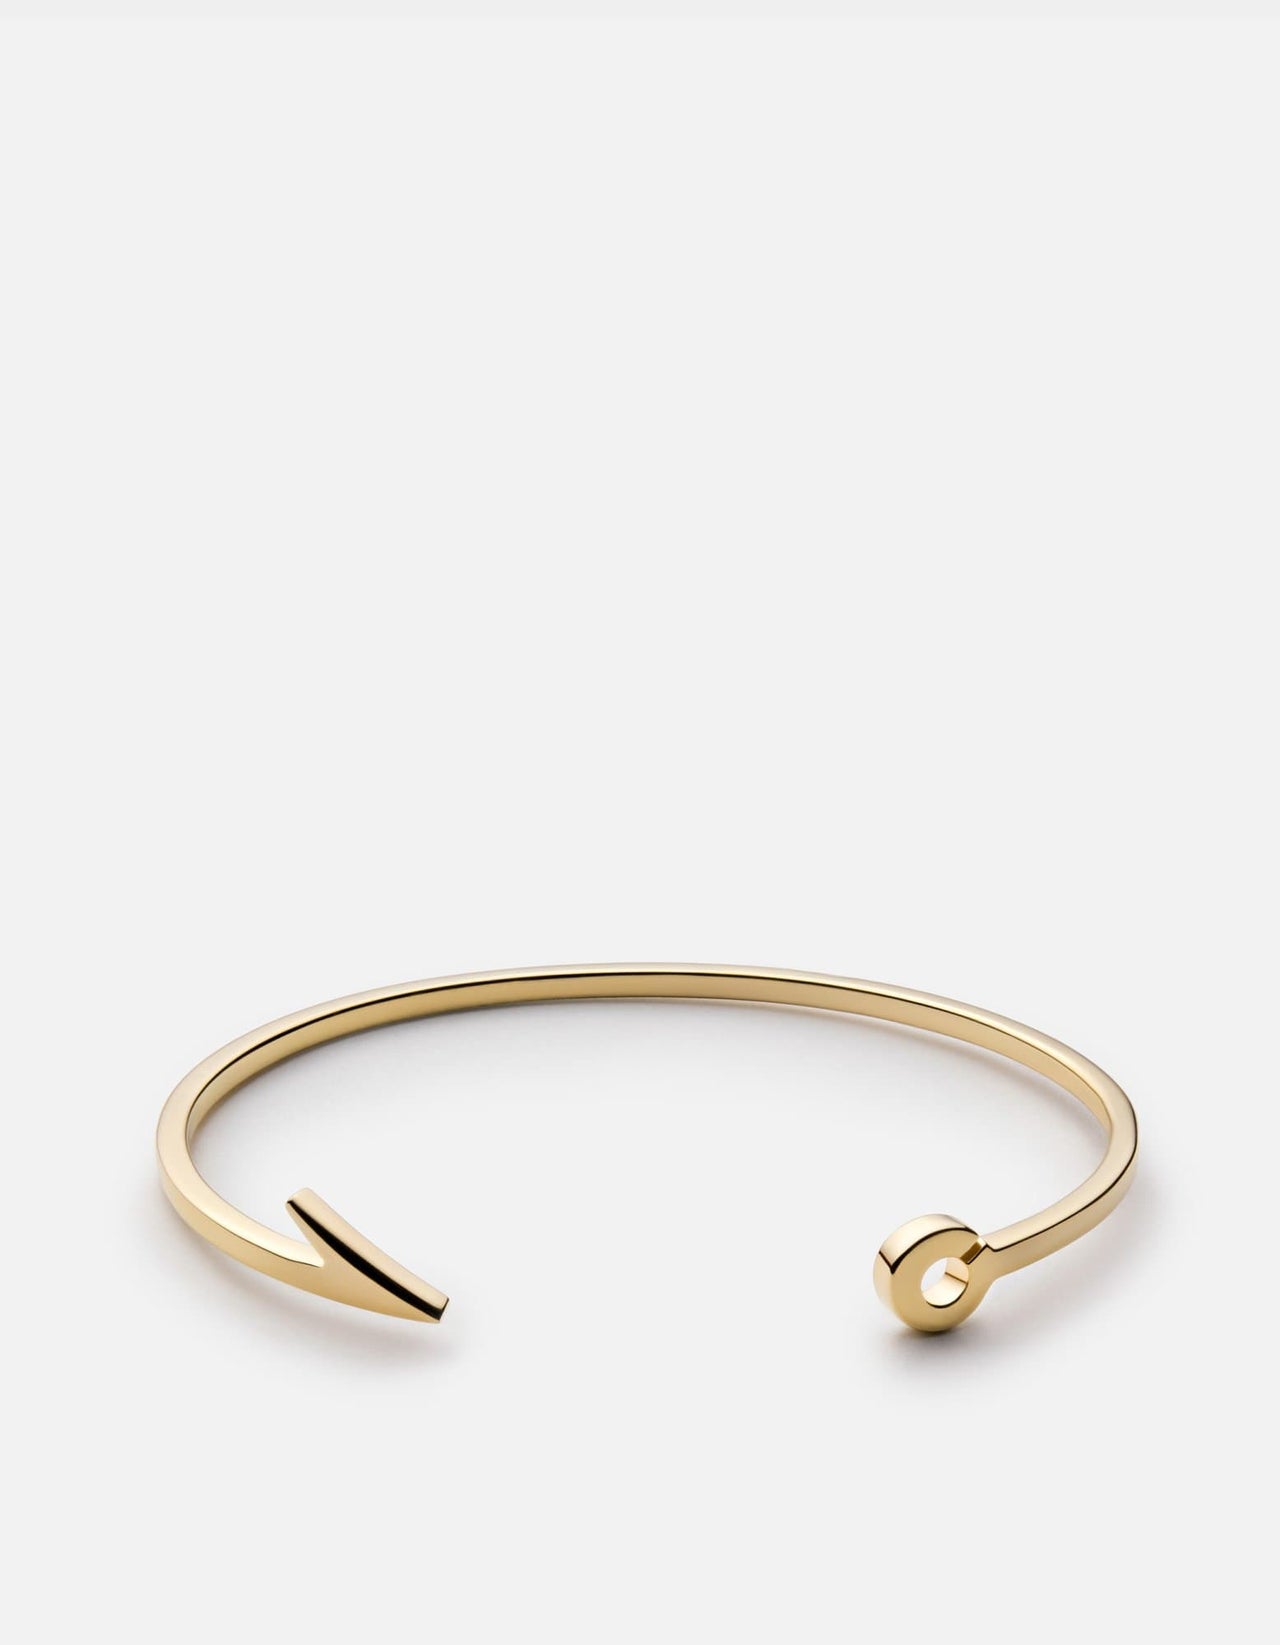 Thin Fish Hook Cuff Bracelet, Gold Vermeil, Women's Cuffs